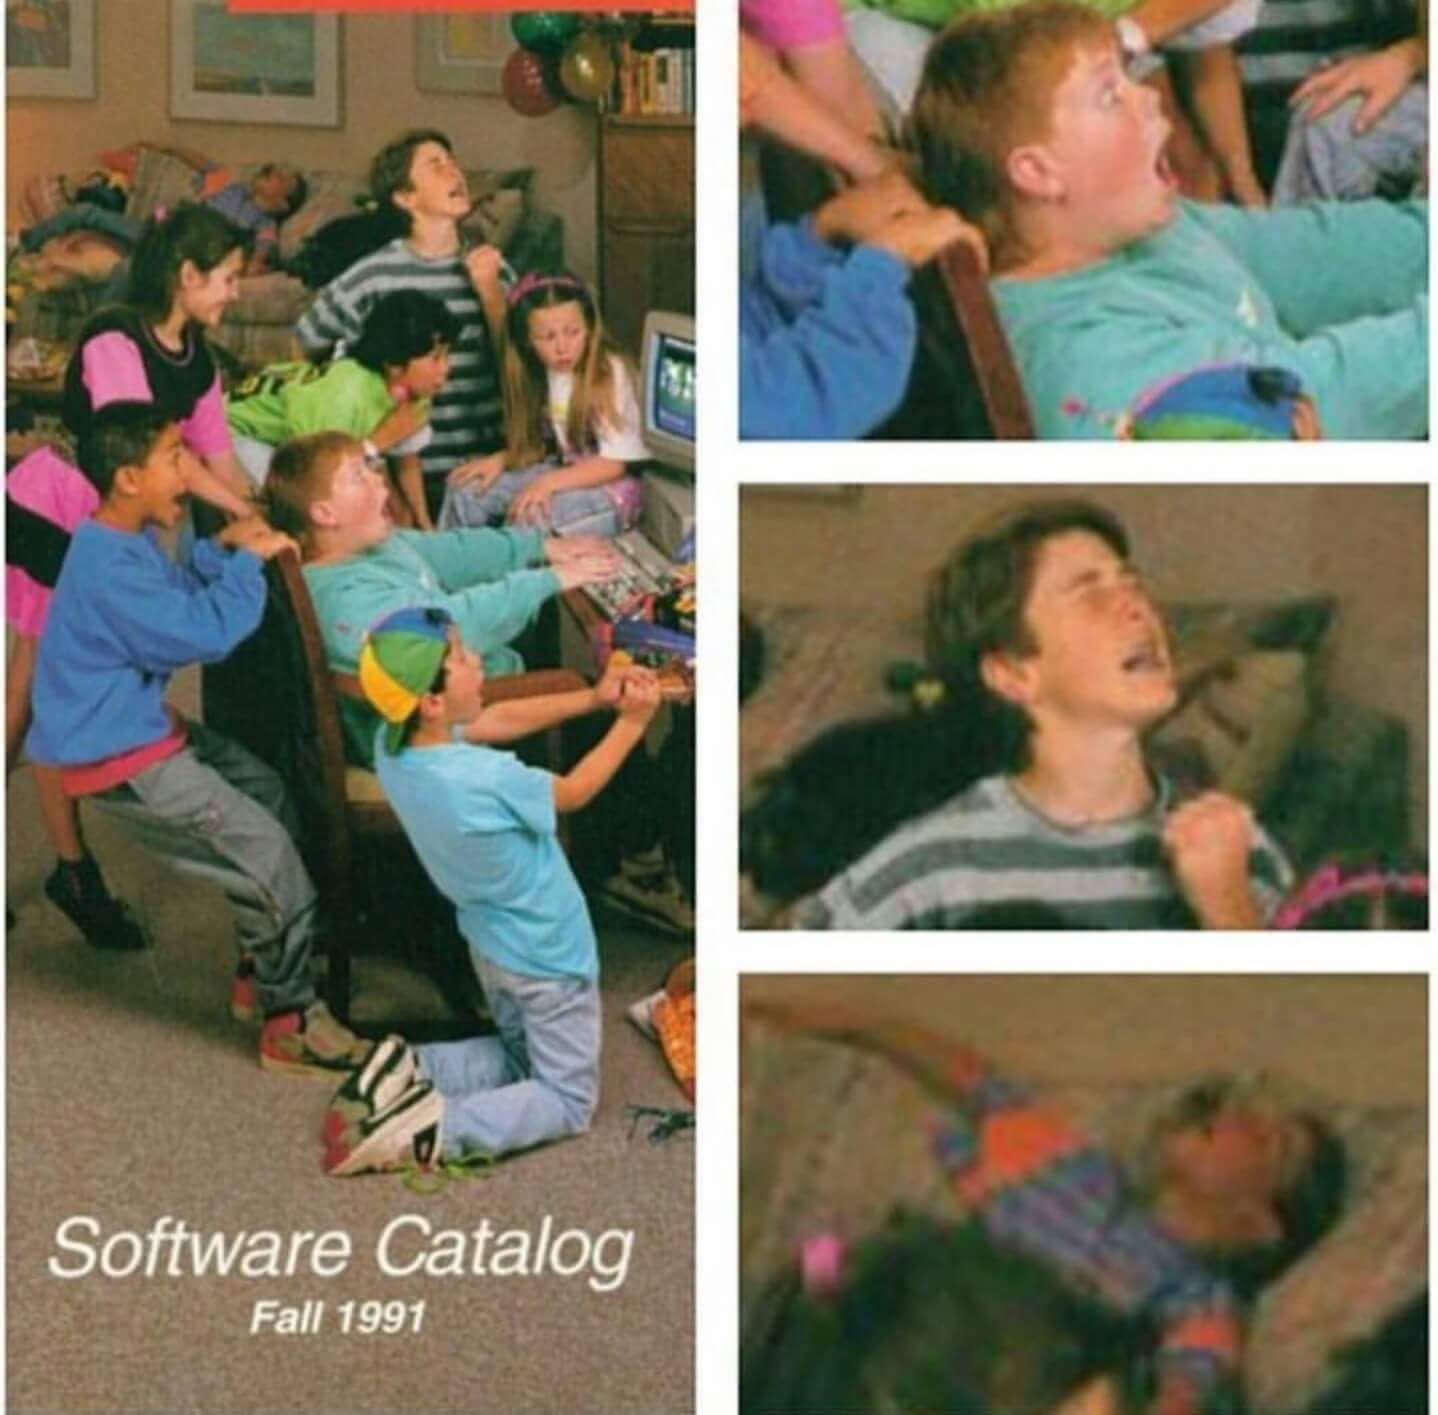 software catalog 1991, kids overacting